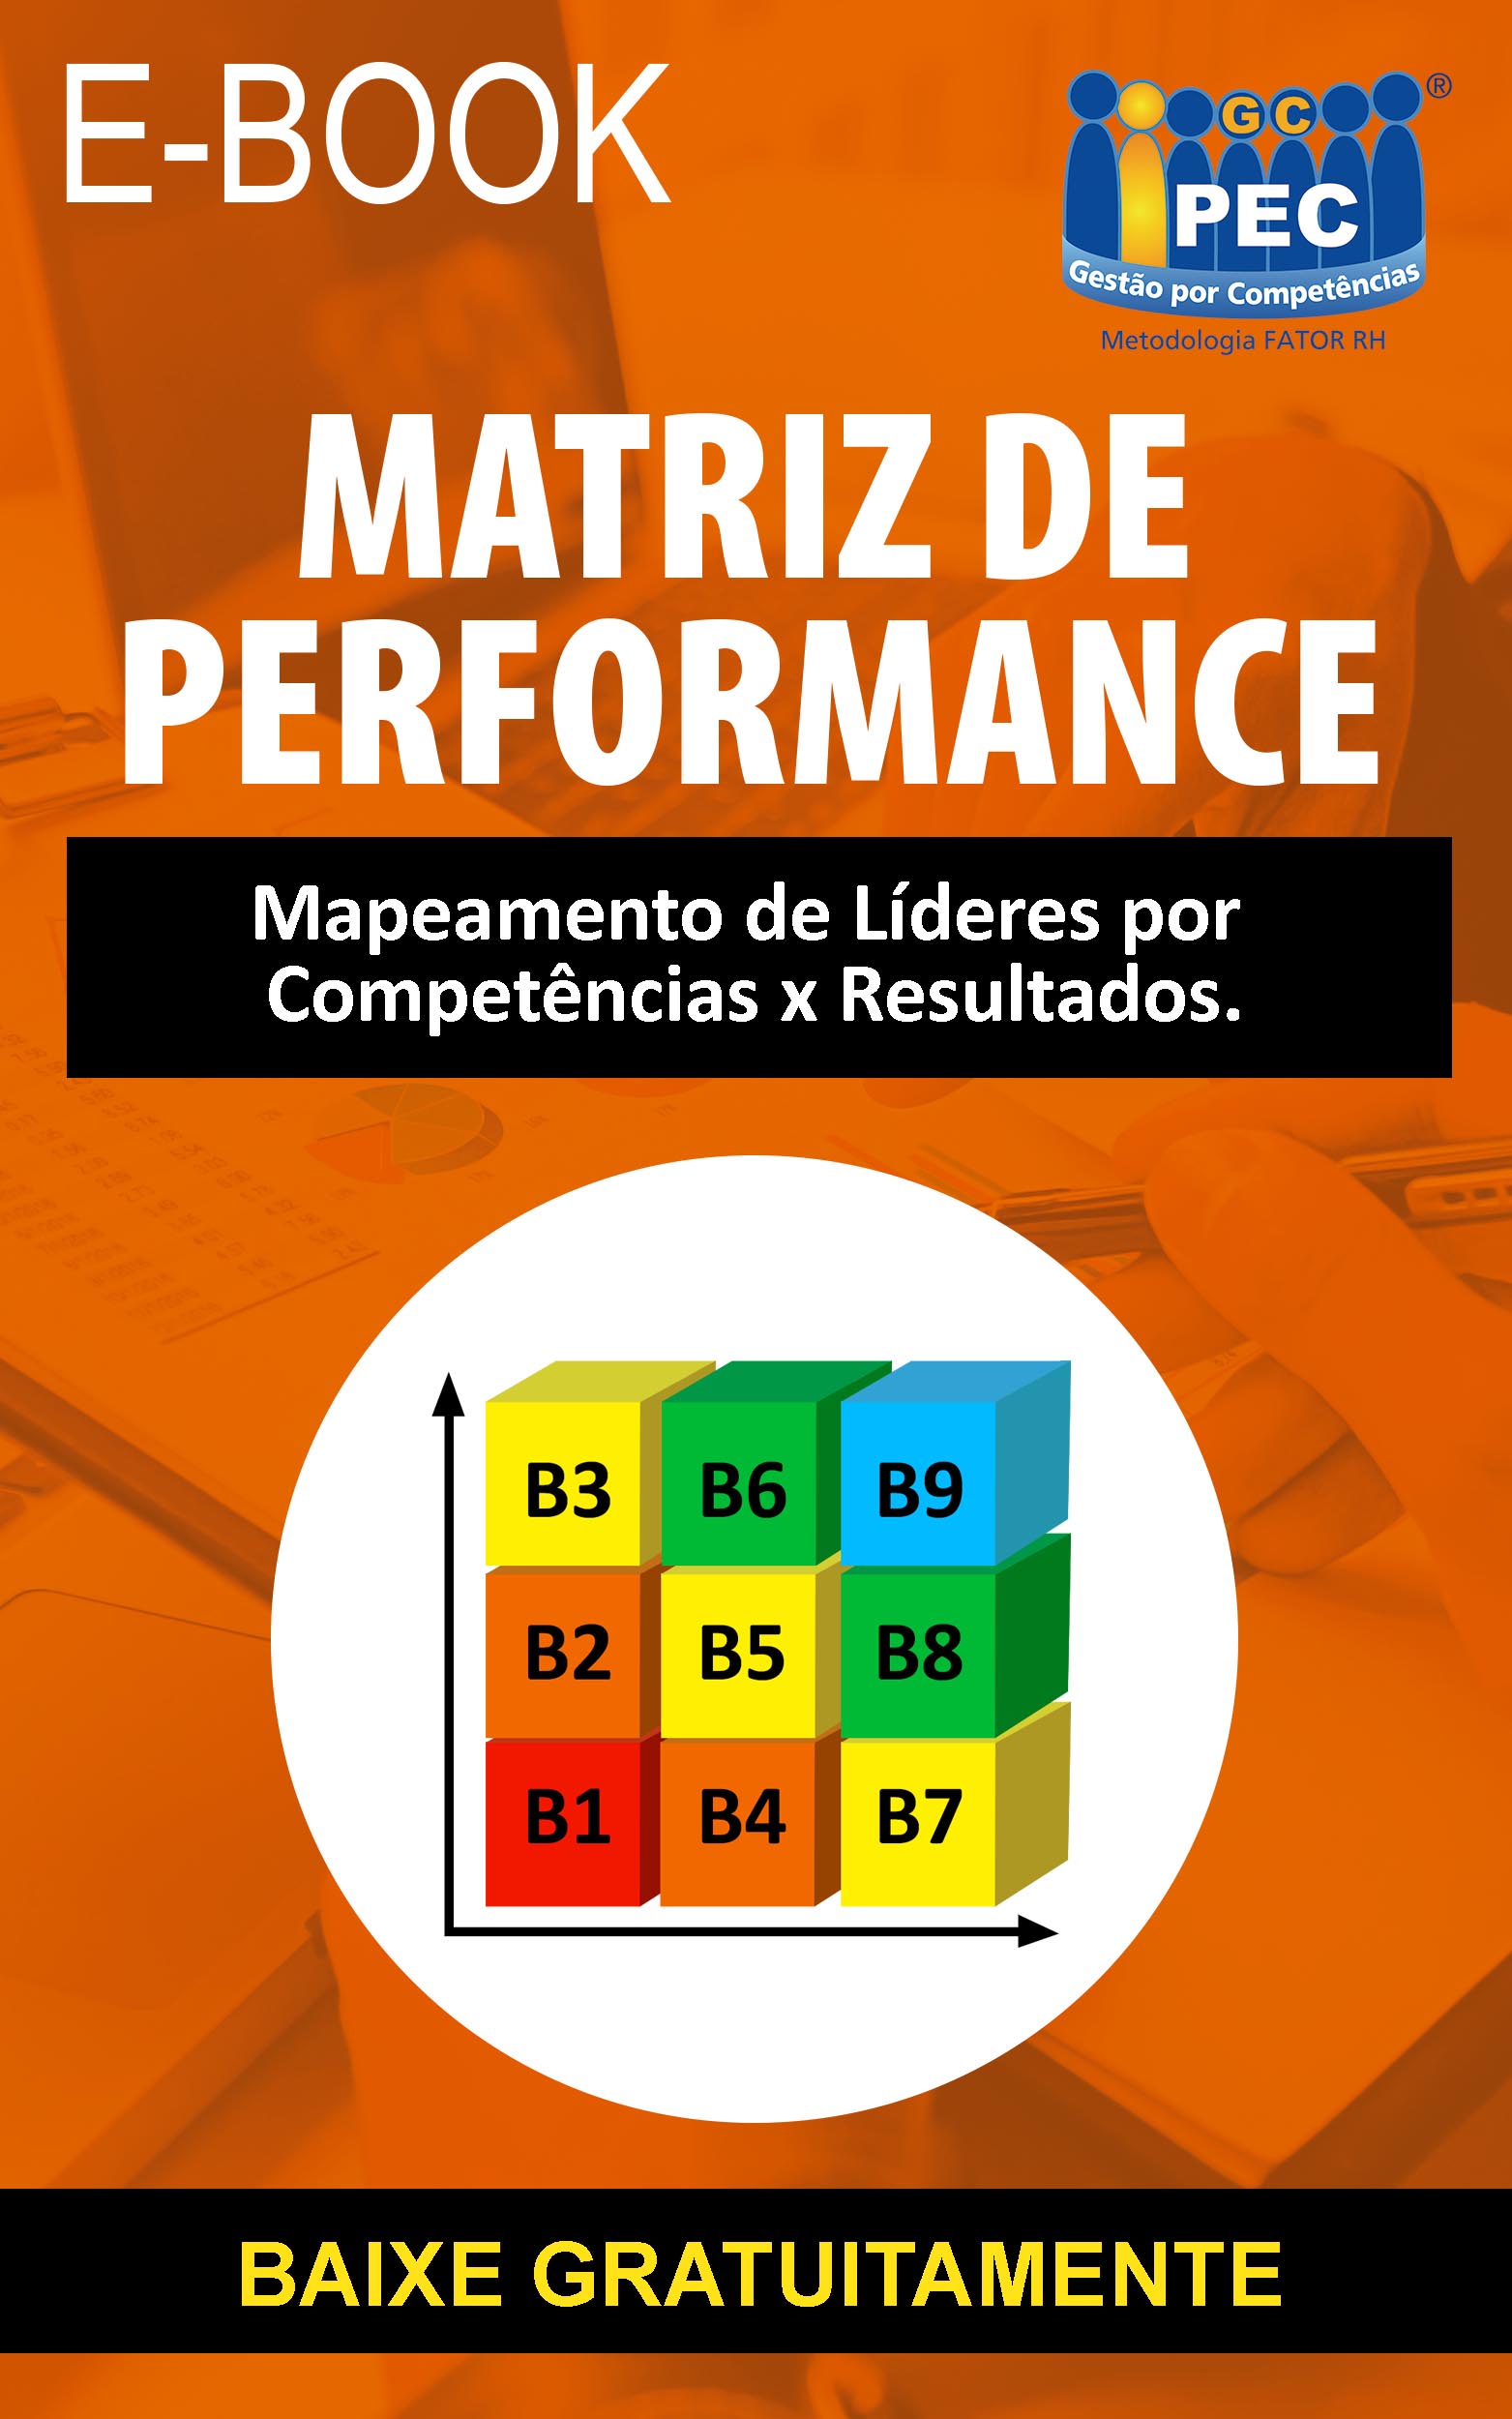 E-book Matriz de Performance - 9box - Baixe Gratuitamente